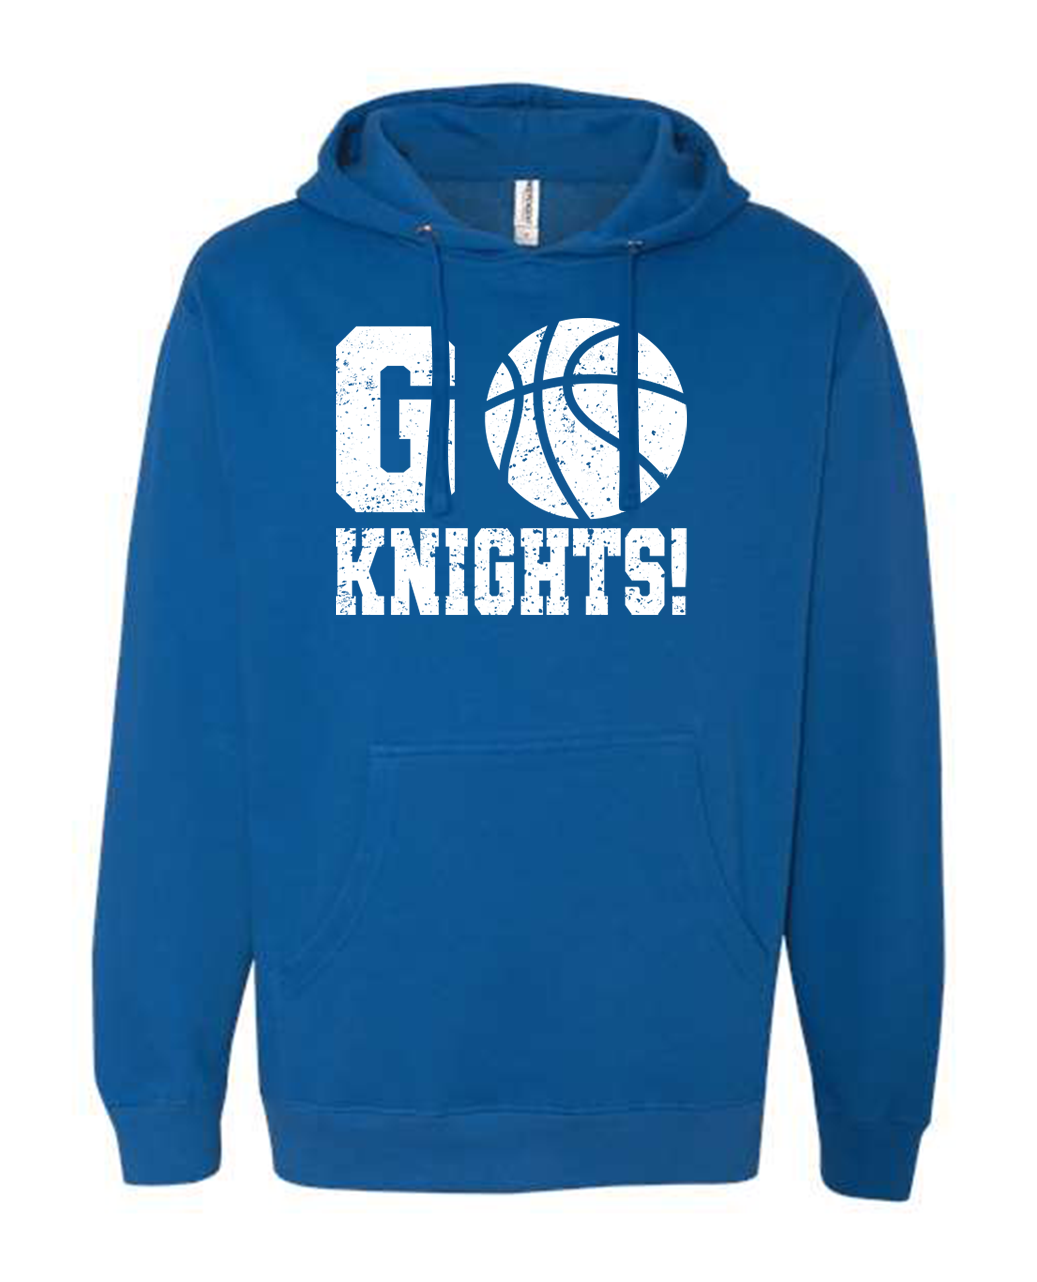 Go Knights - YOUTH Hooded Sweatshirt - Royal